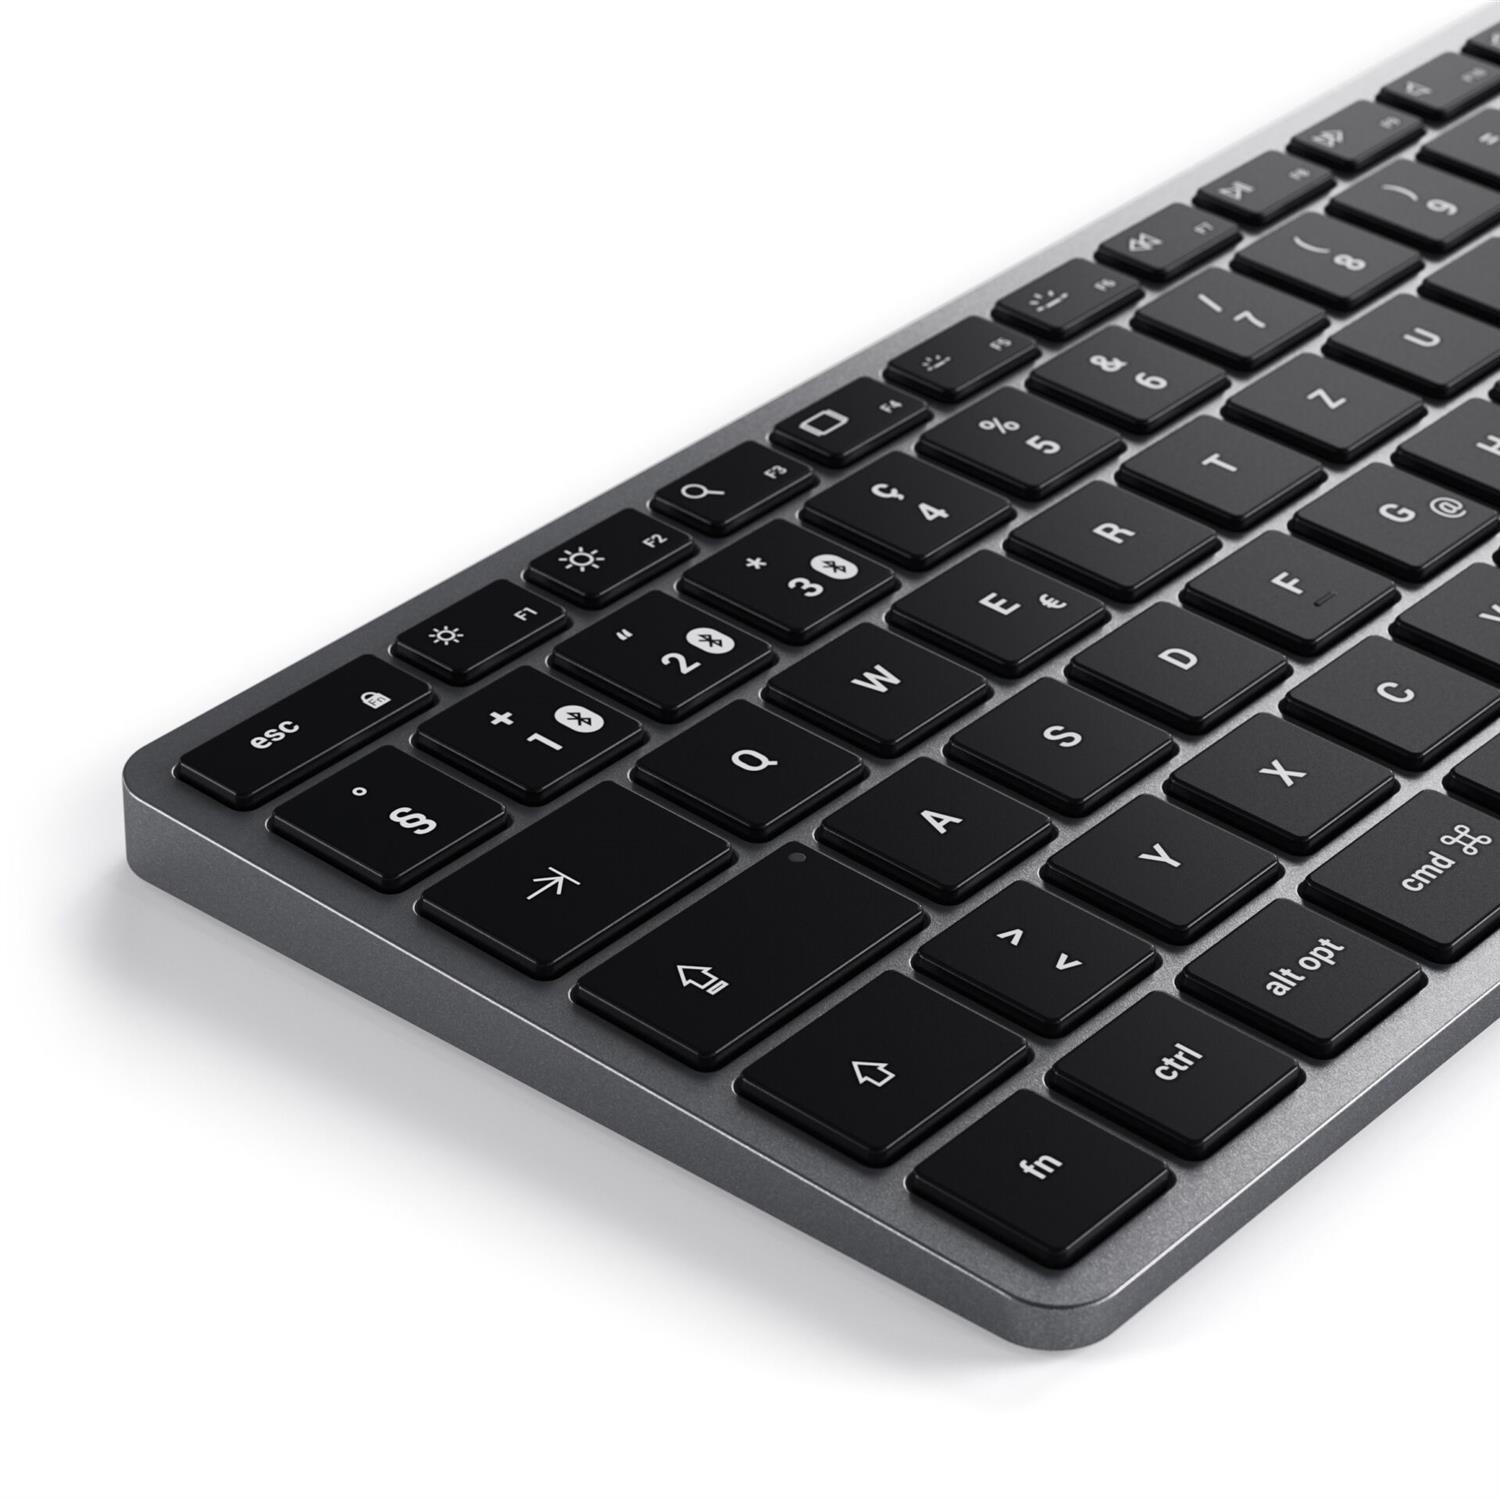 Satechi Slim X1 Bluetooth Keyboard-CH (Swiss)